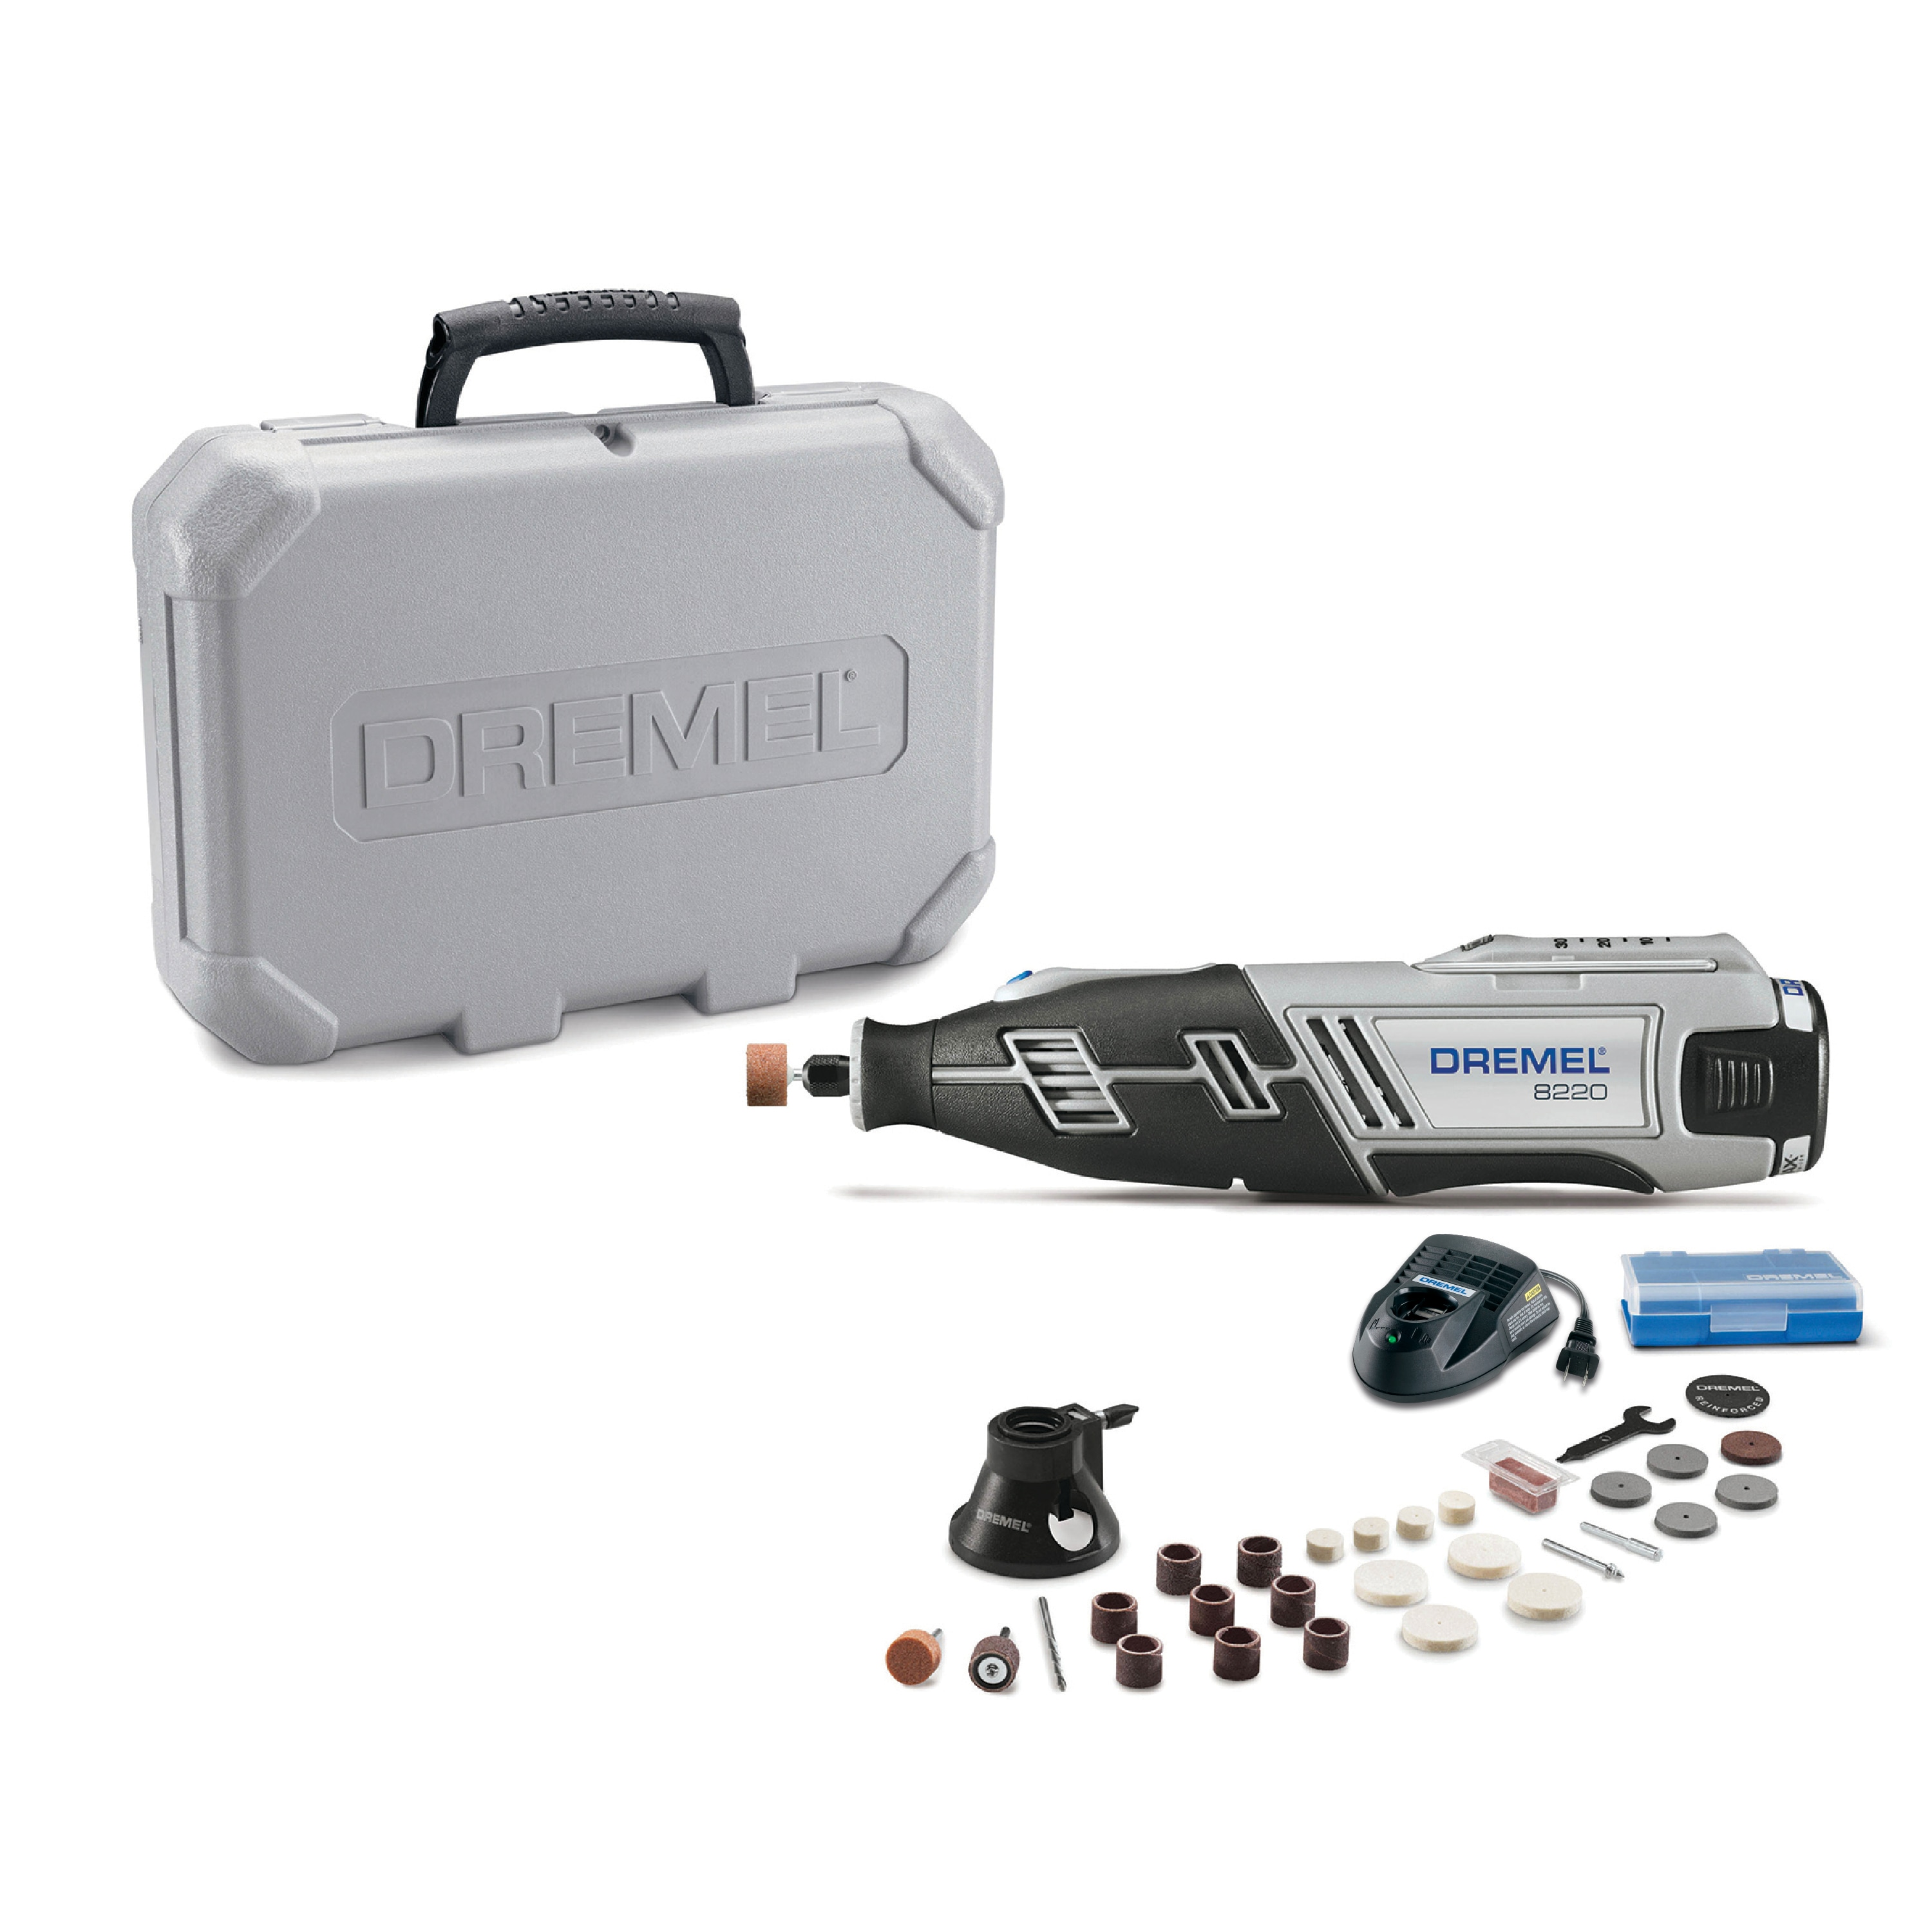 Dremel F0138220JG 8220-2/45 12V Lithium-Ion Rotary Multi-Tool Kit